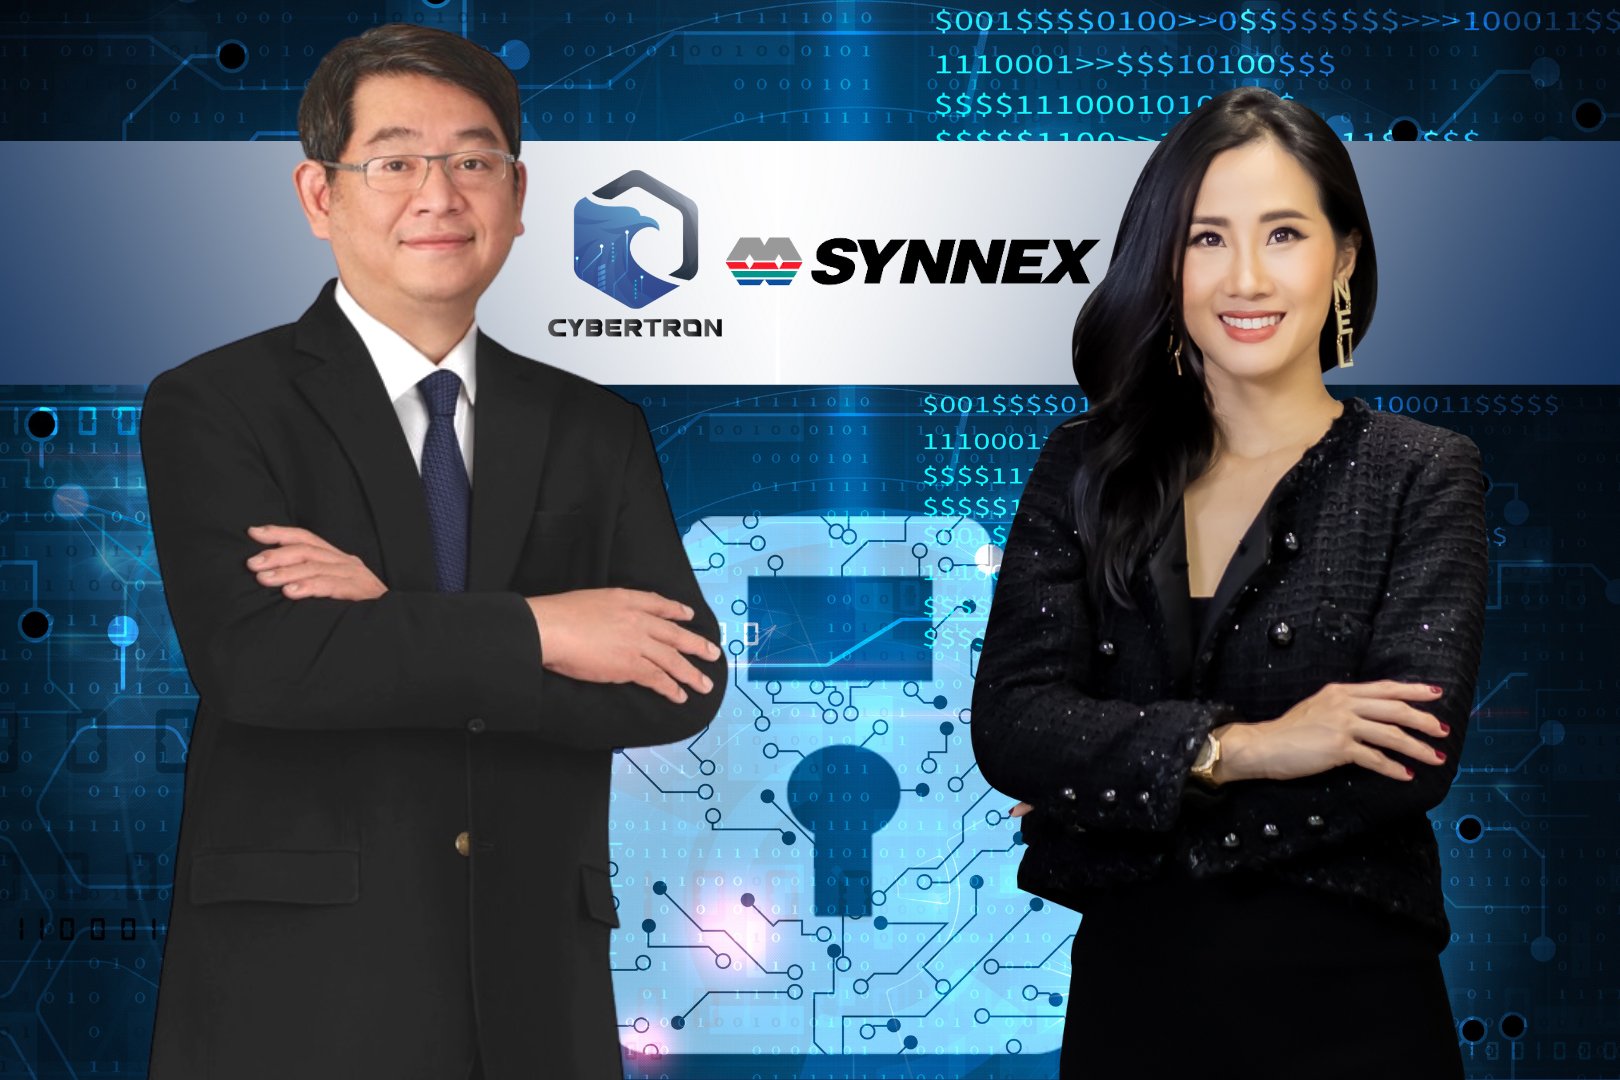 SYNEX เข้าลงทุน Cybertron 25% ผนึกกำลังรุกธุรกิจไซเบอร์ ซีเคียวริตี้แบบครบวงจร